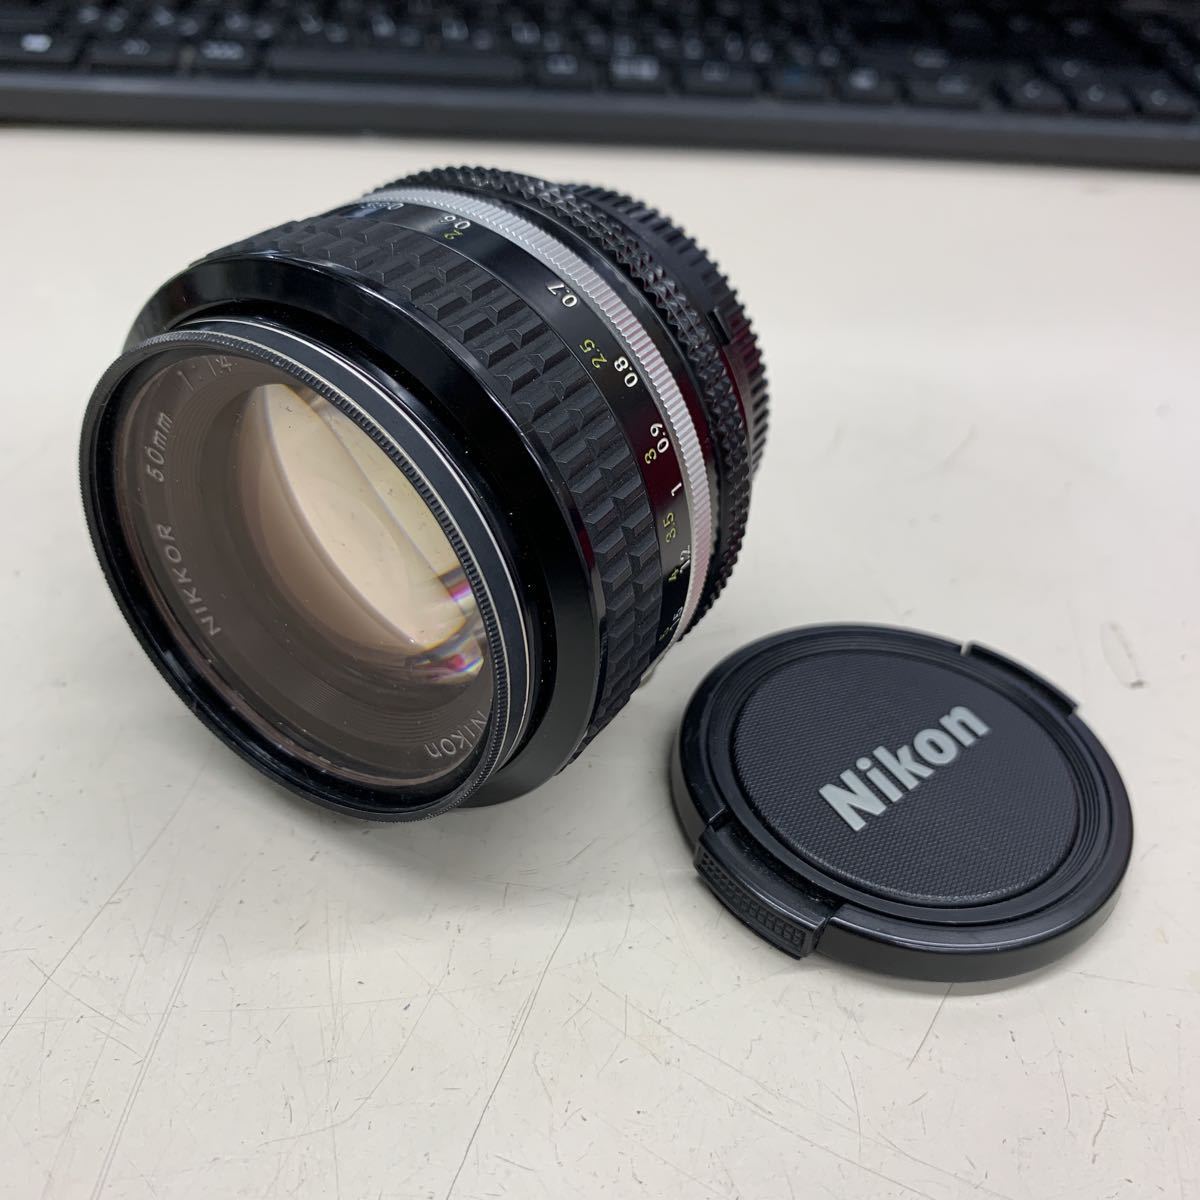 K274【美品】Nikon ニコン 純正 NIKKOR 50mm MF 高級単焦点レンズ 1:1.4 希少な作動品の画像1